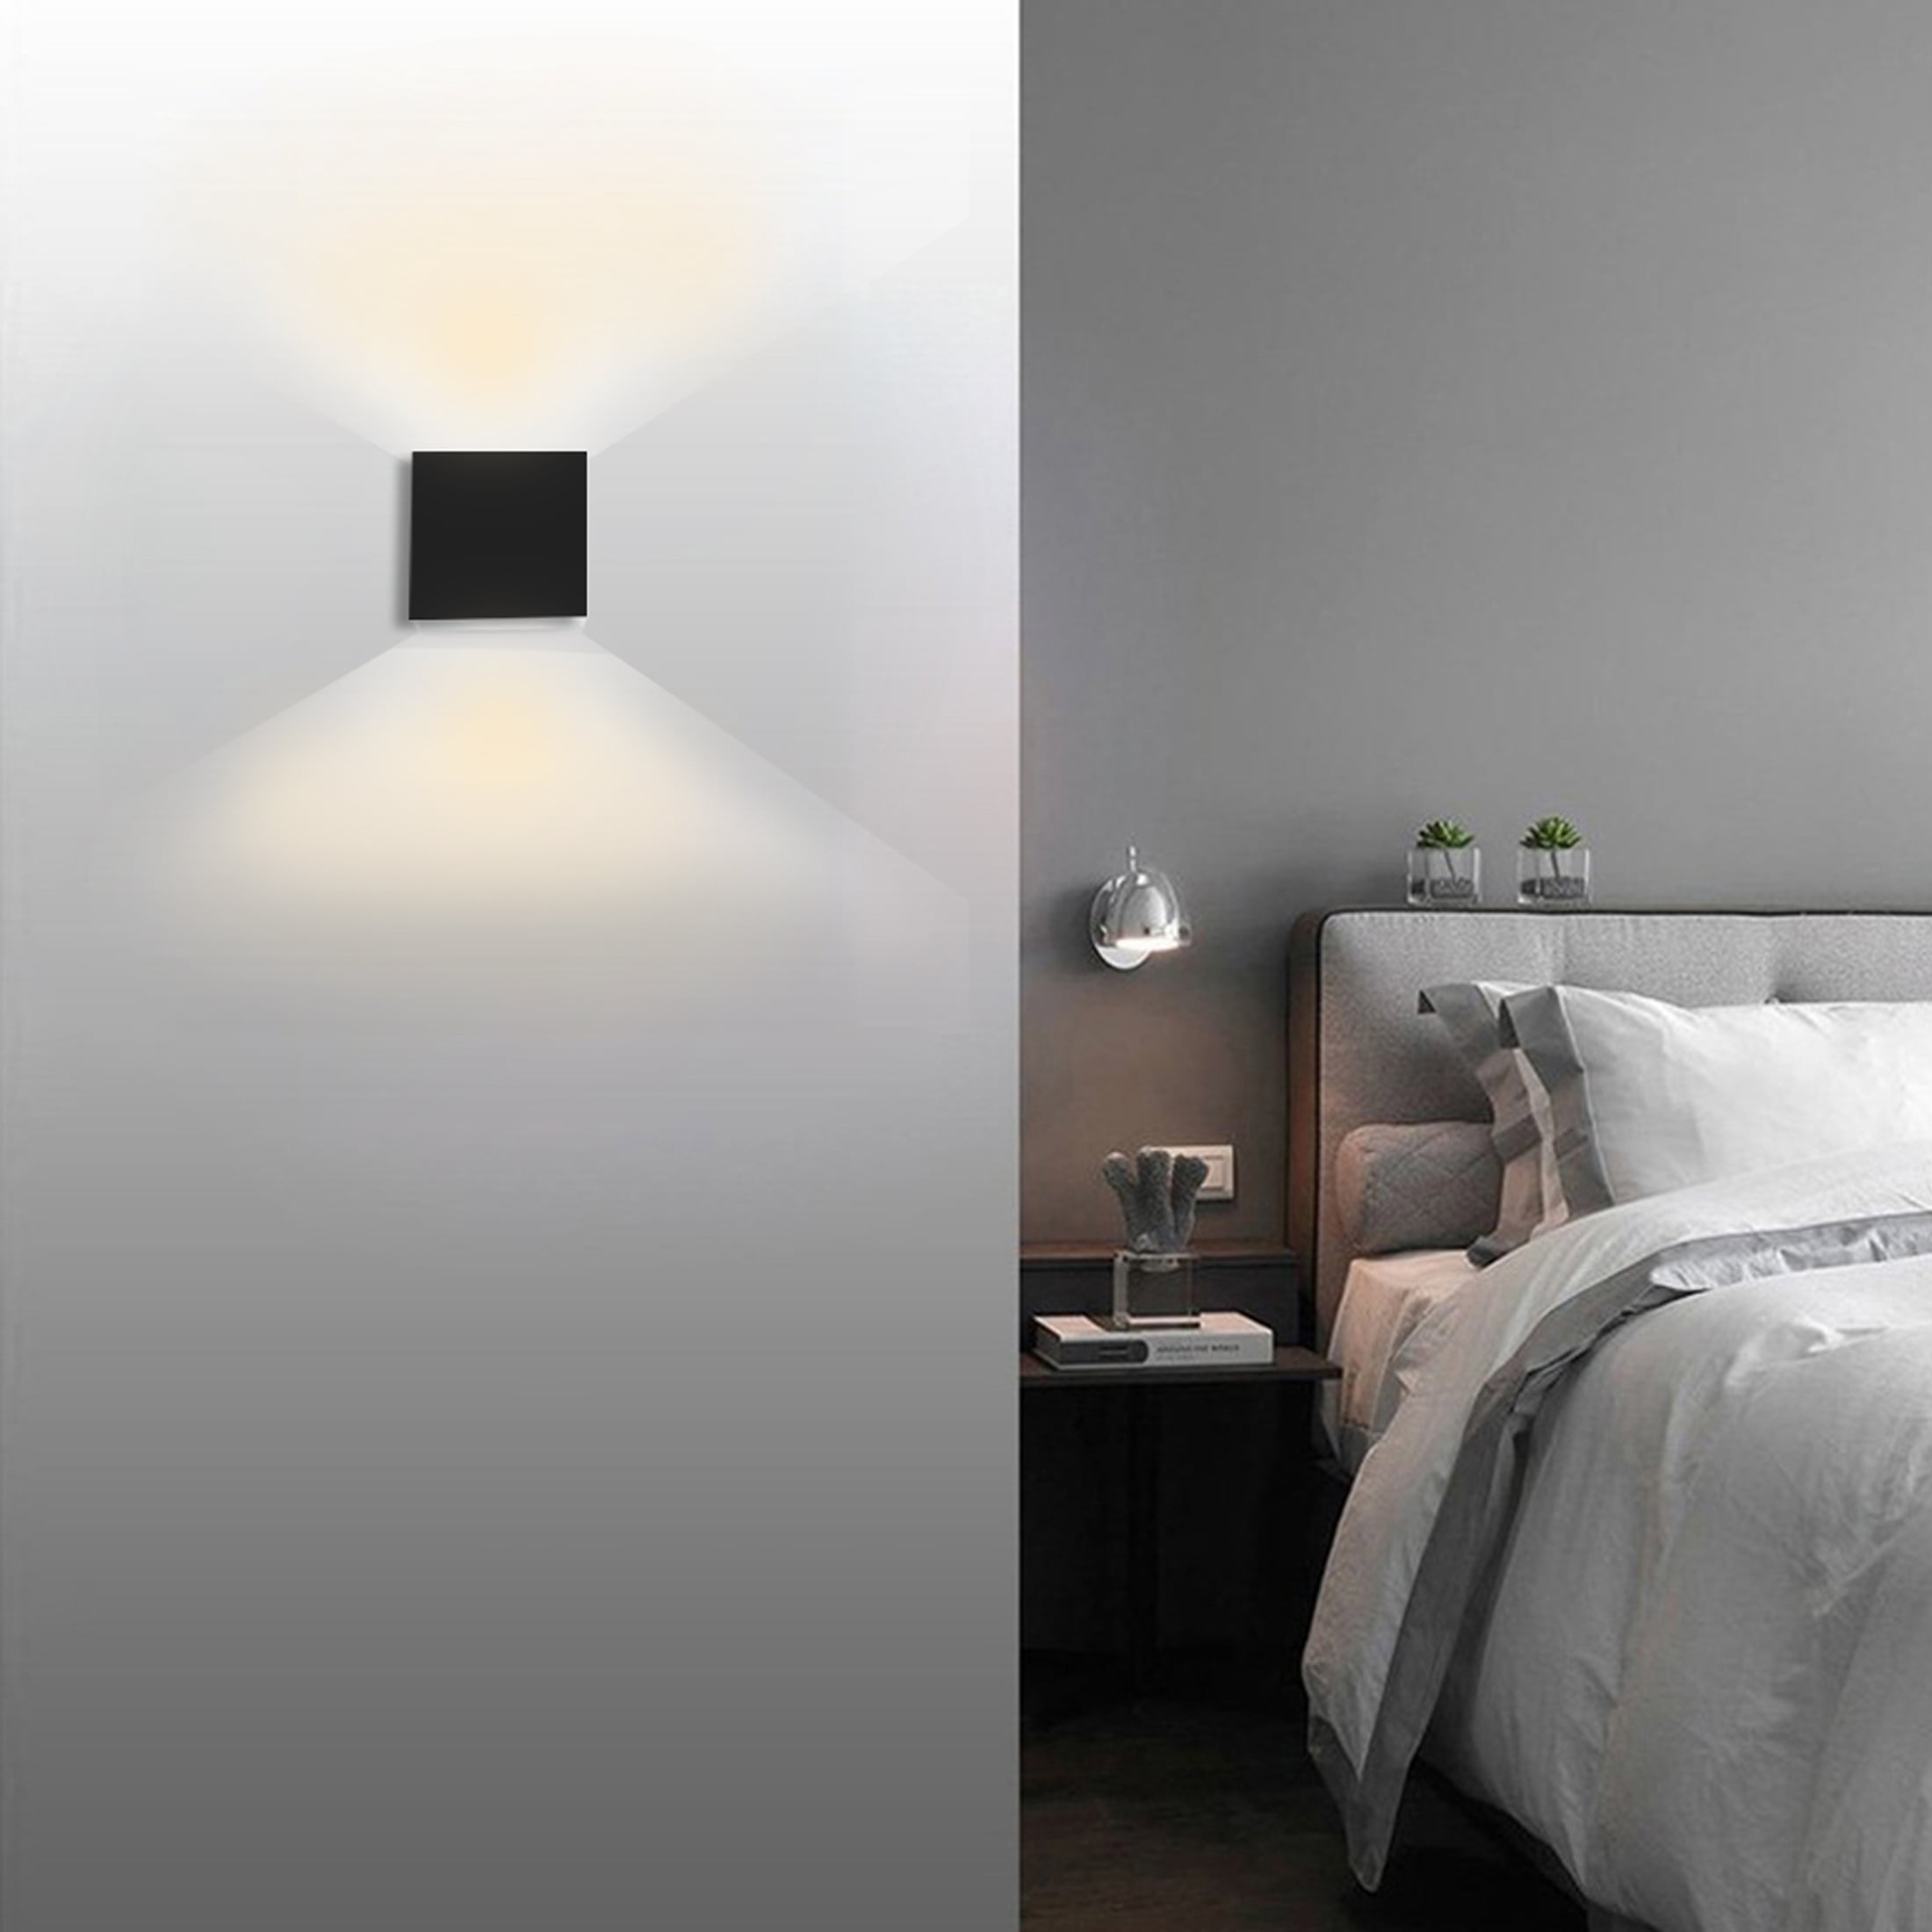 LED Wall Lamp Home Sconce Light Bedside Aisle Spot Lighting Fixture Decor 